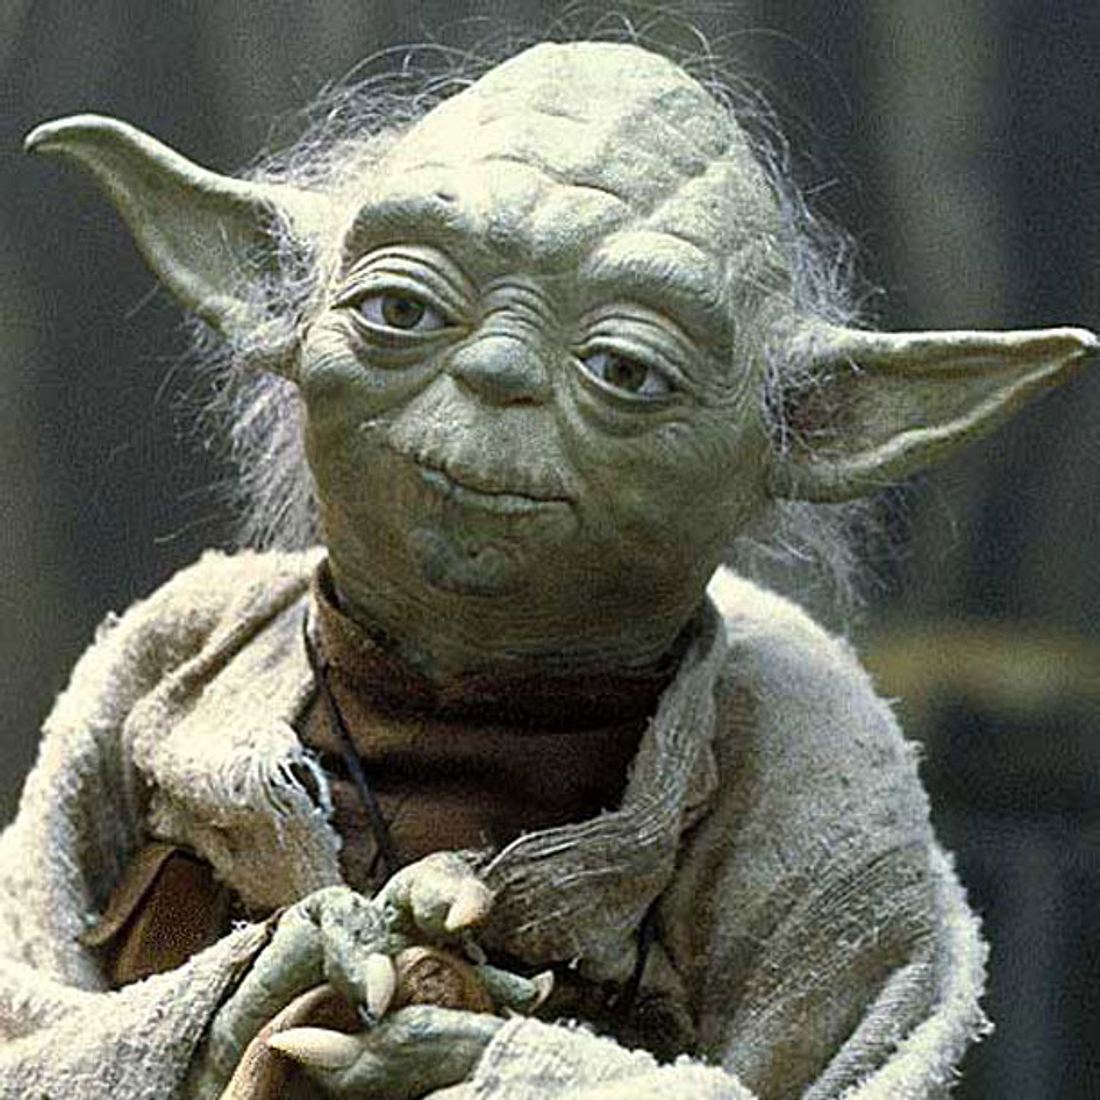 Feiert Yoda sein Comeback?